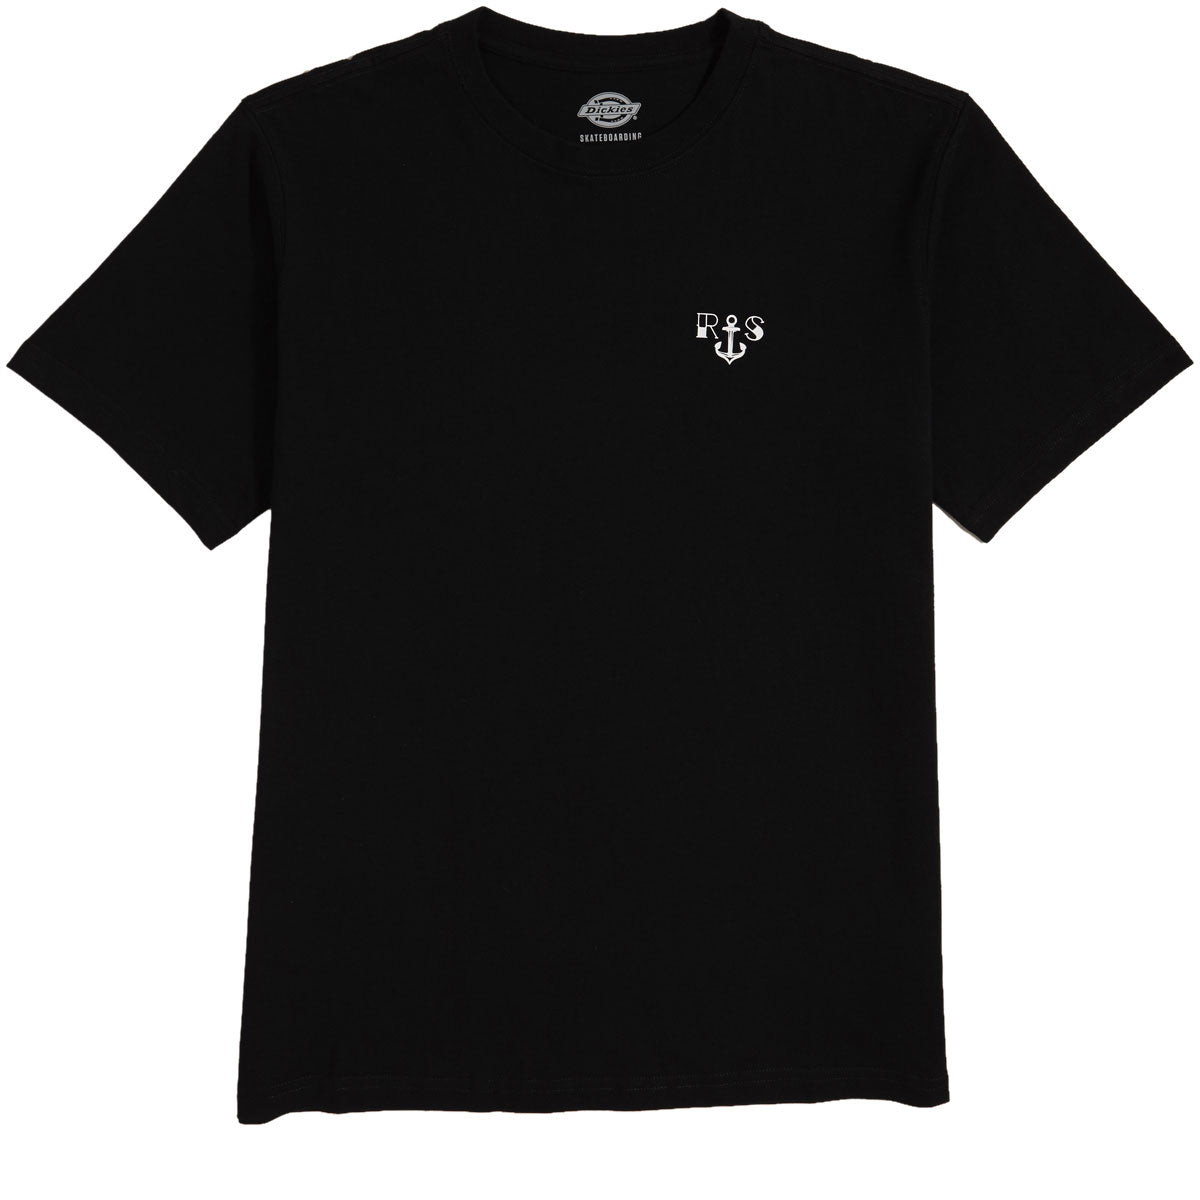 Dickies Ronnie Sandoval Americana T-Shirt - Knit Black image 1